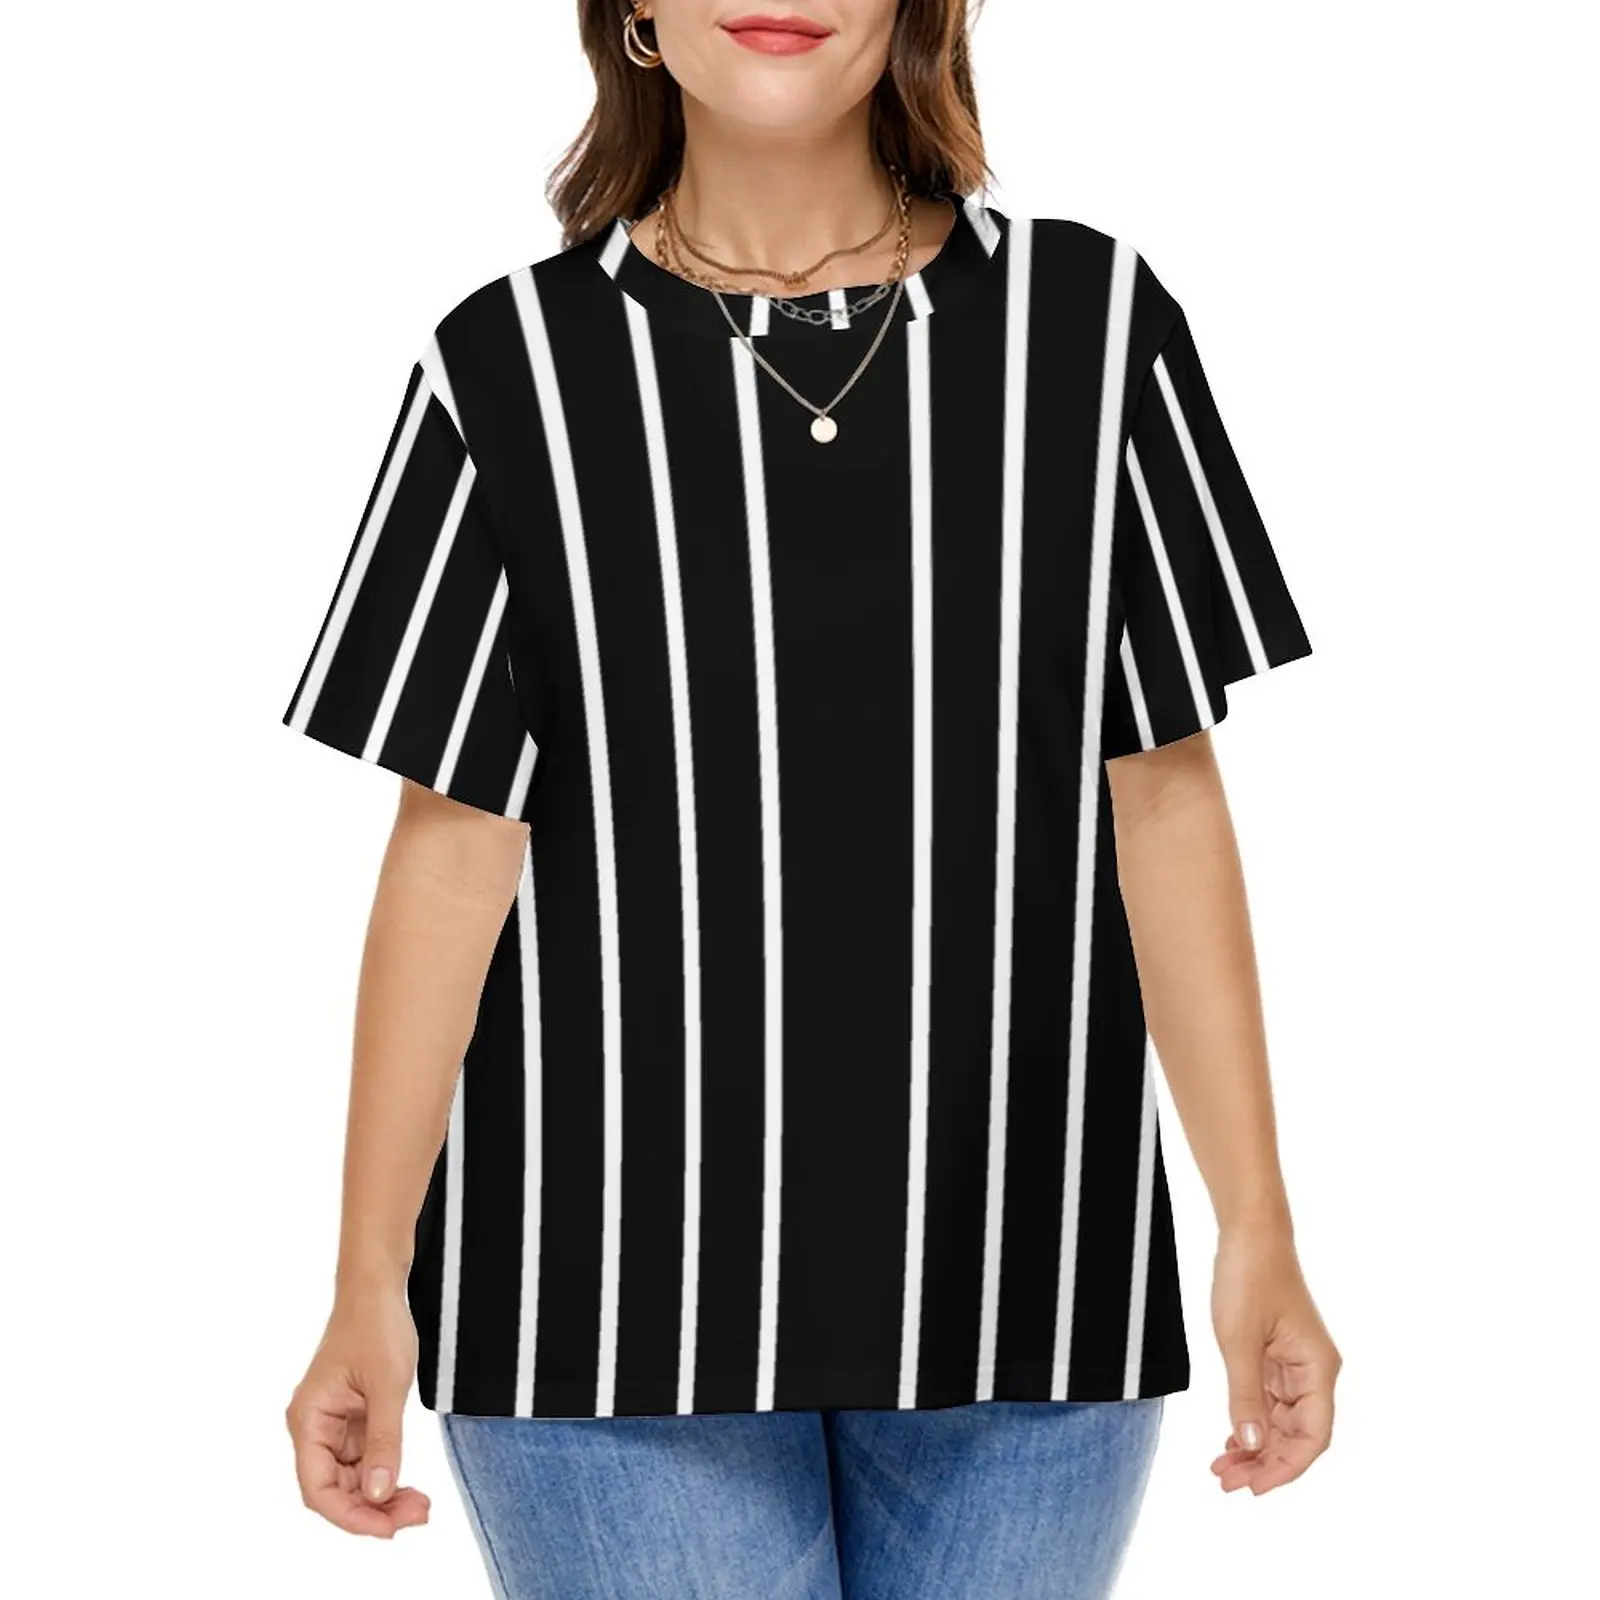 Vertical Striped T Shirt Black White Lines Elegant T Shirts Short Sleeves Printed Tops Ladies Casual Top Tees Plus Size 4XL 5XL